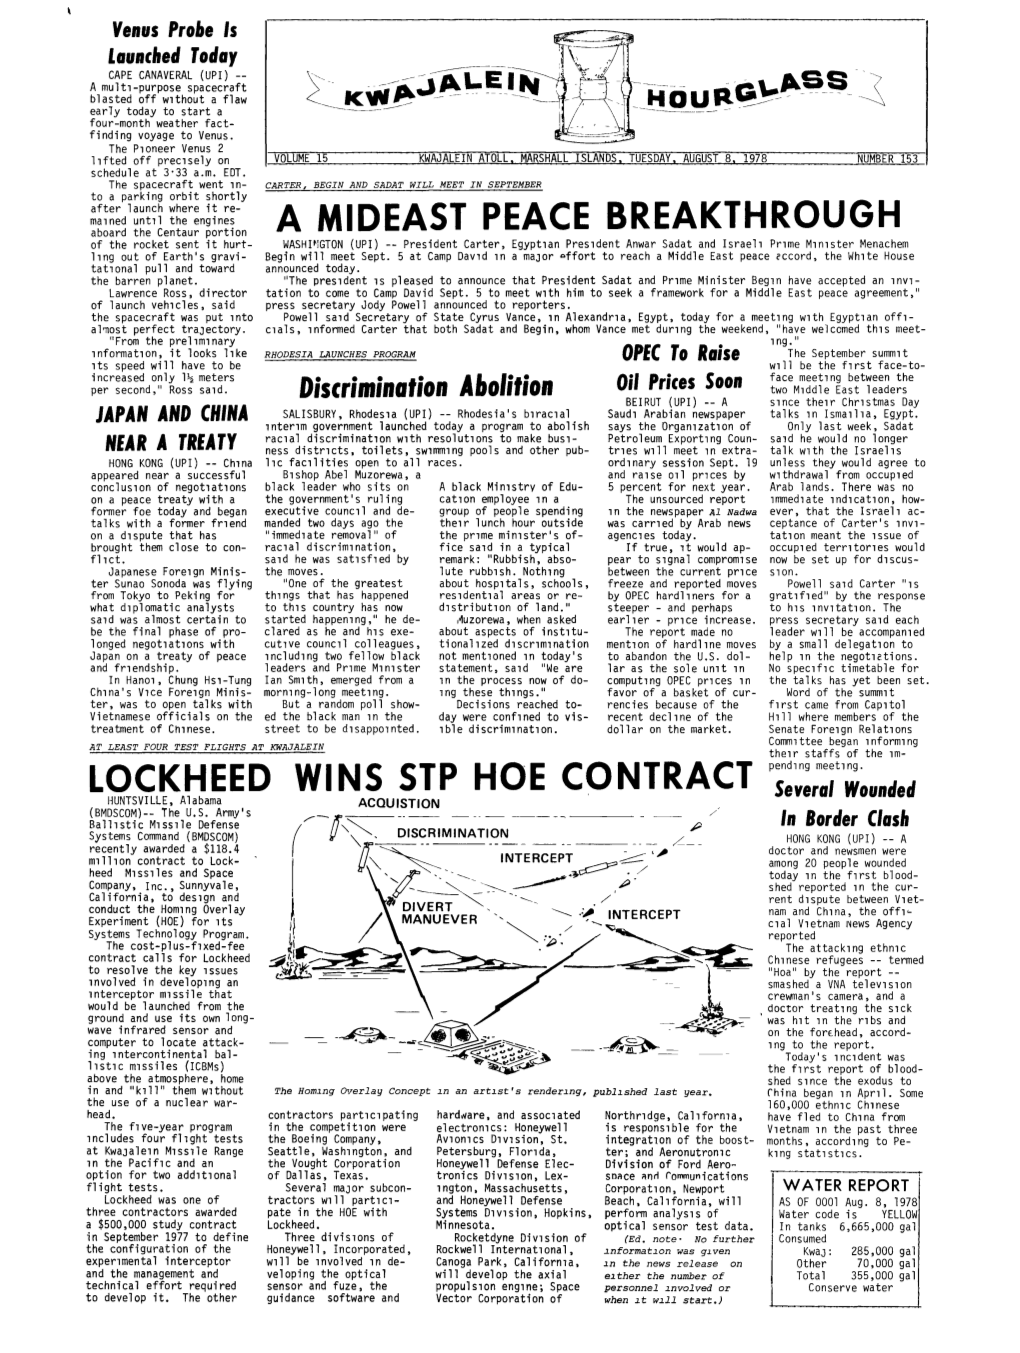 A Mideast Peace Breakthrough Lockheed Wins Stp